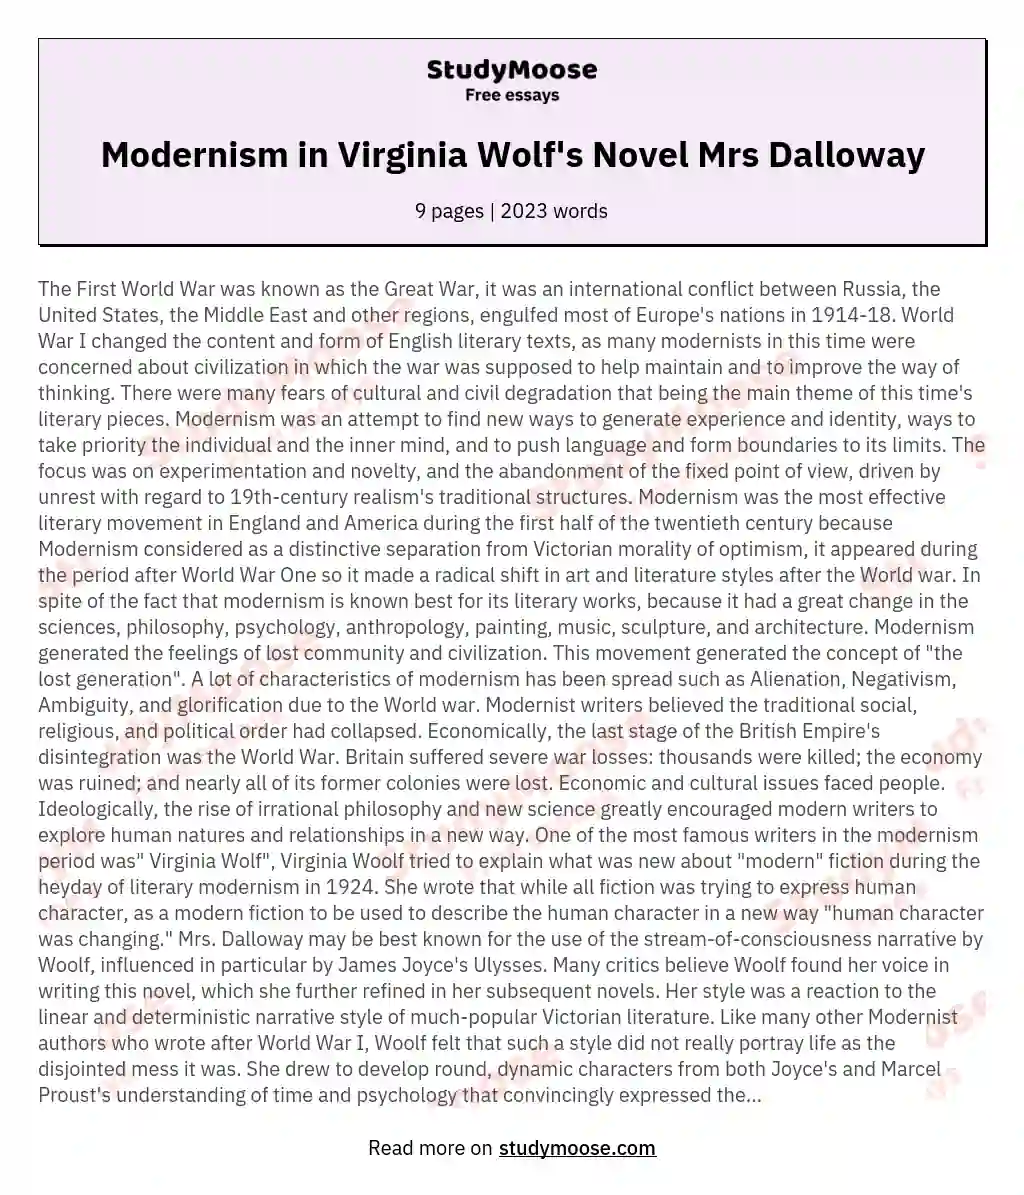 Modernism in Virginia Wolf's Novel Mrs Dalloway